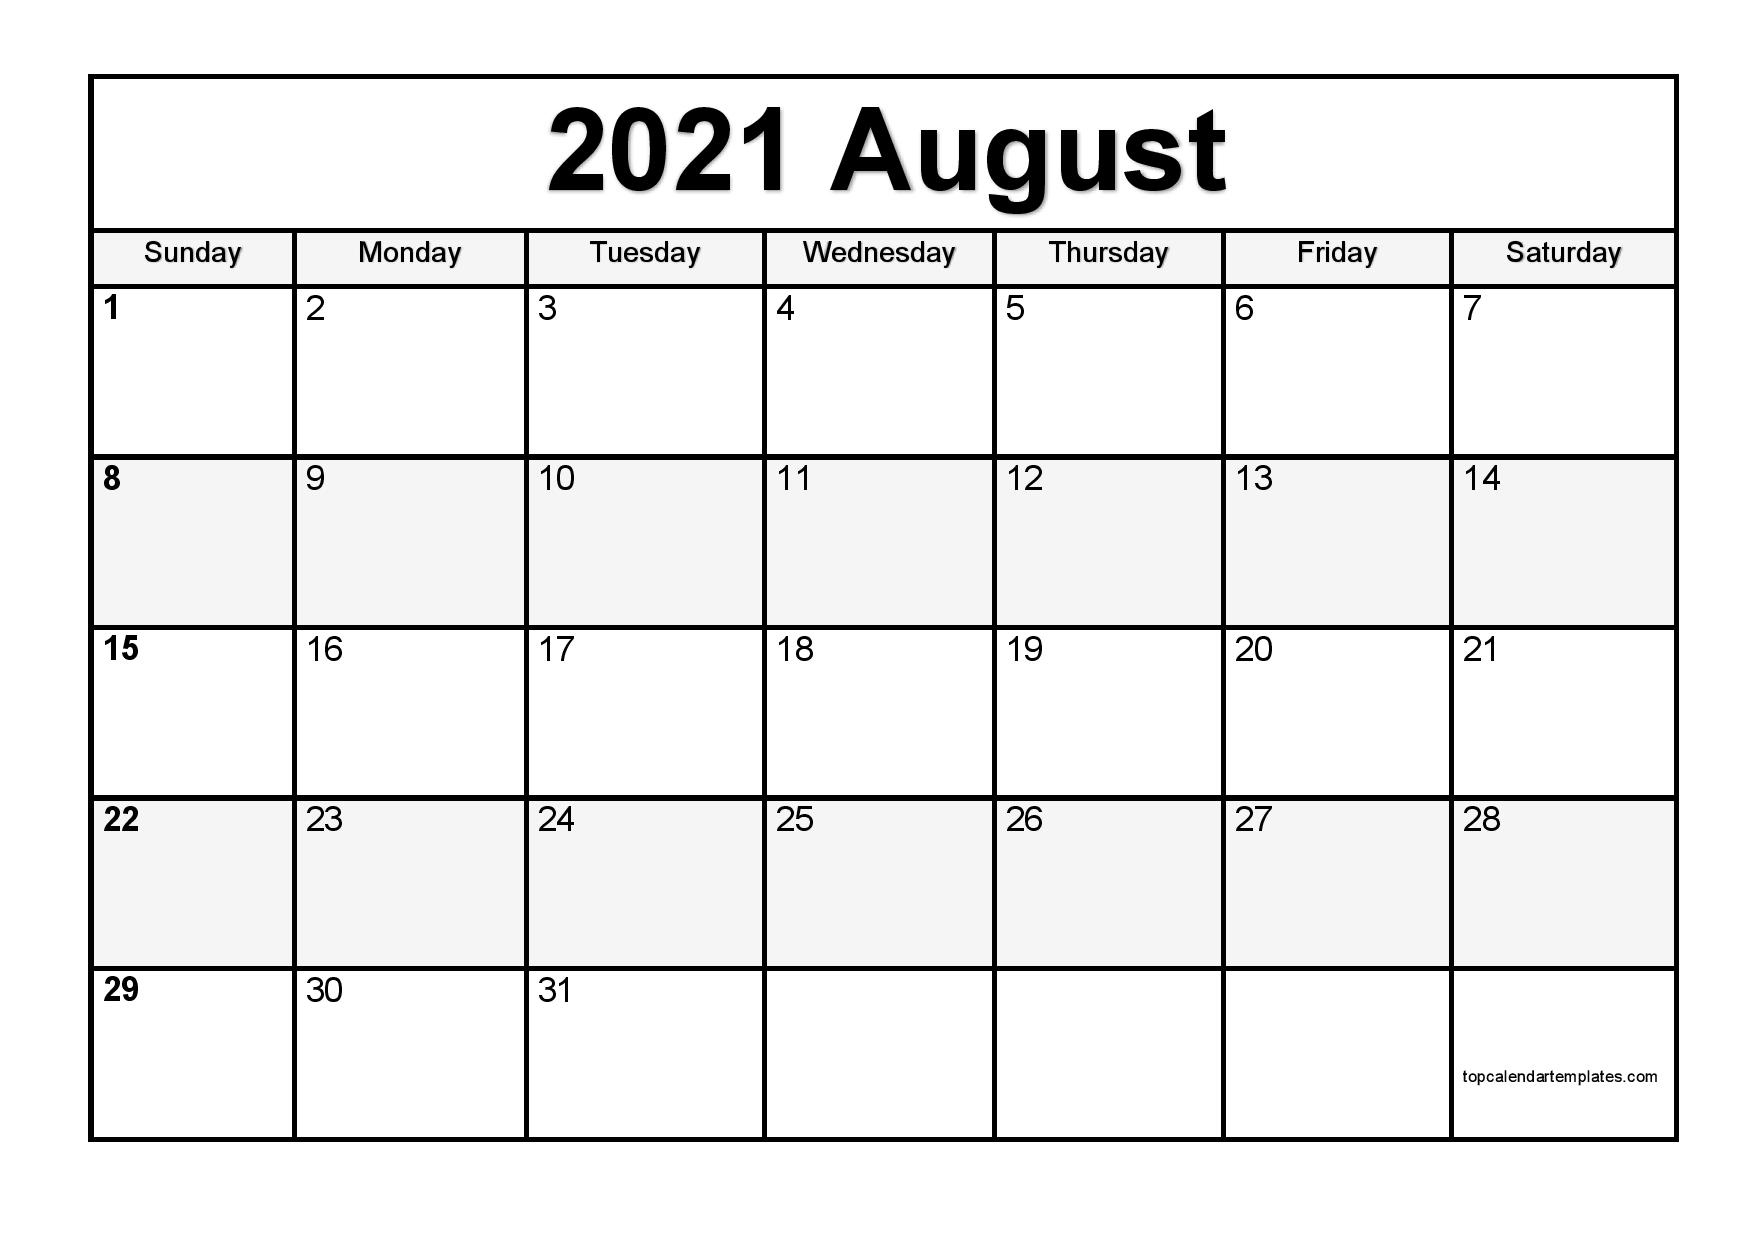 Free August 2021 Printable Calendar - Monthly Templates August 2021 Kalnirnay Calendar